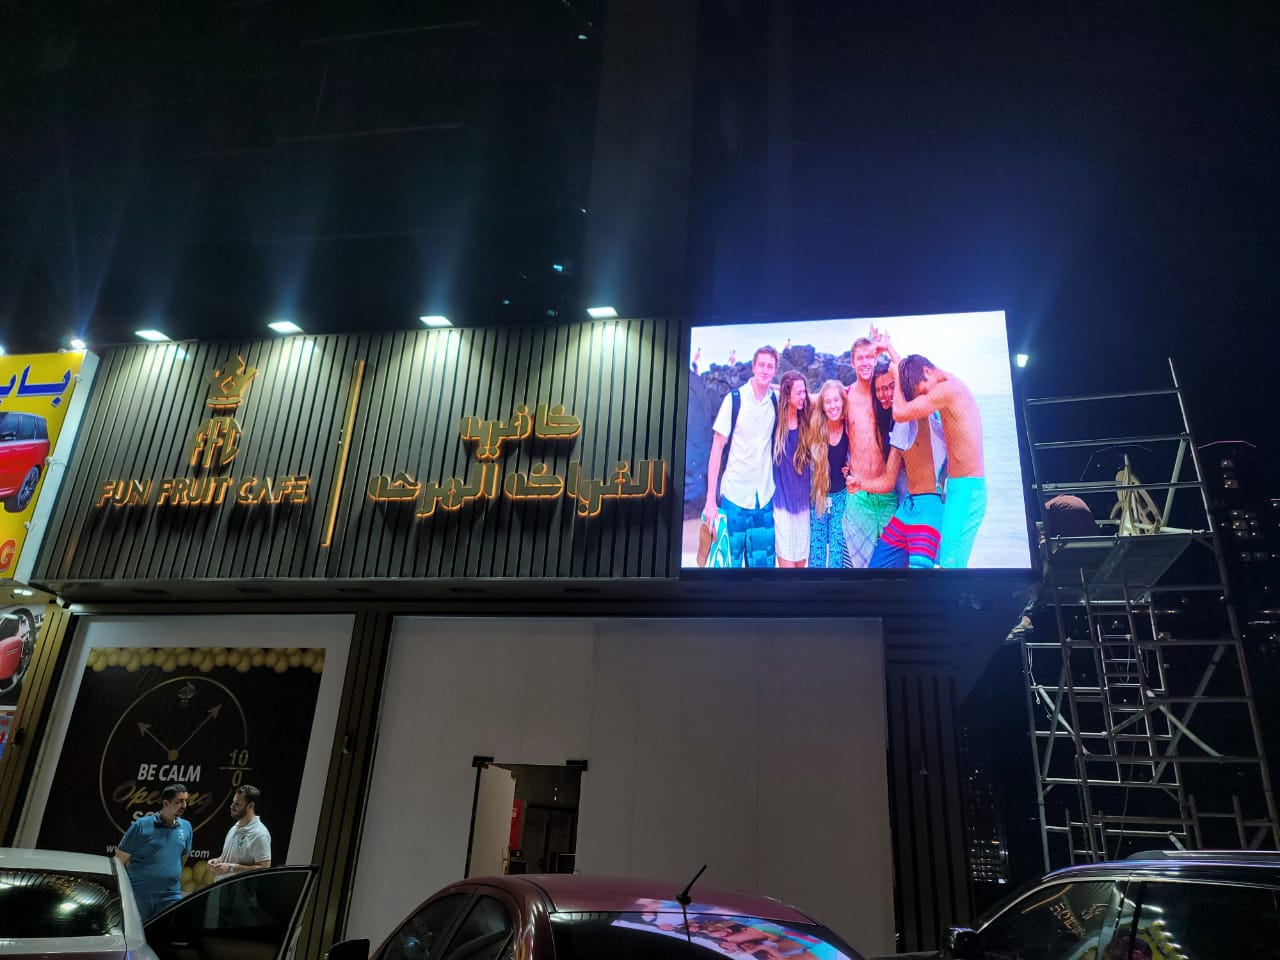 led_screen_suppliers_in_uae<br />
Digital_signage_Dubai